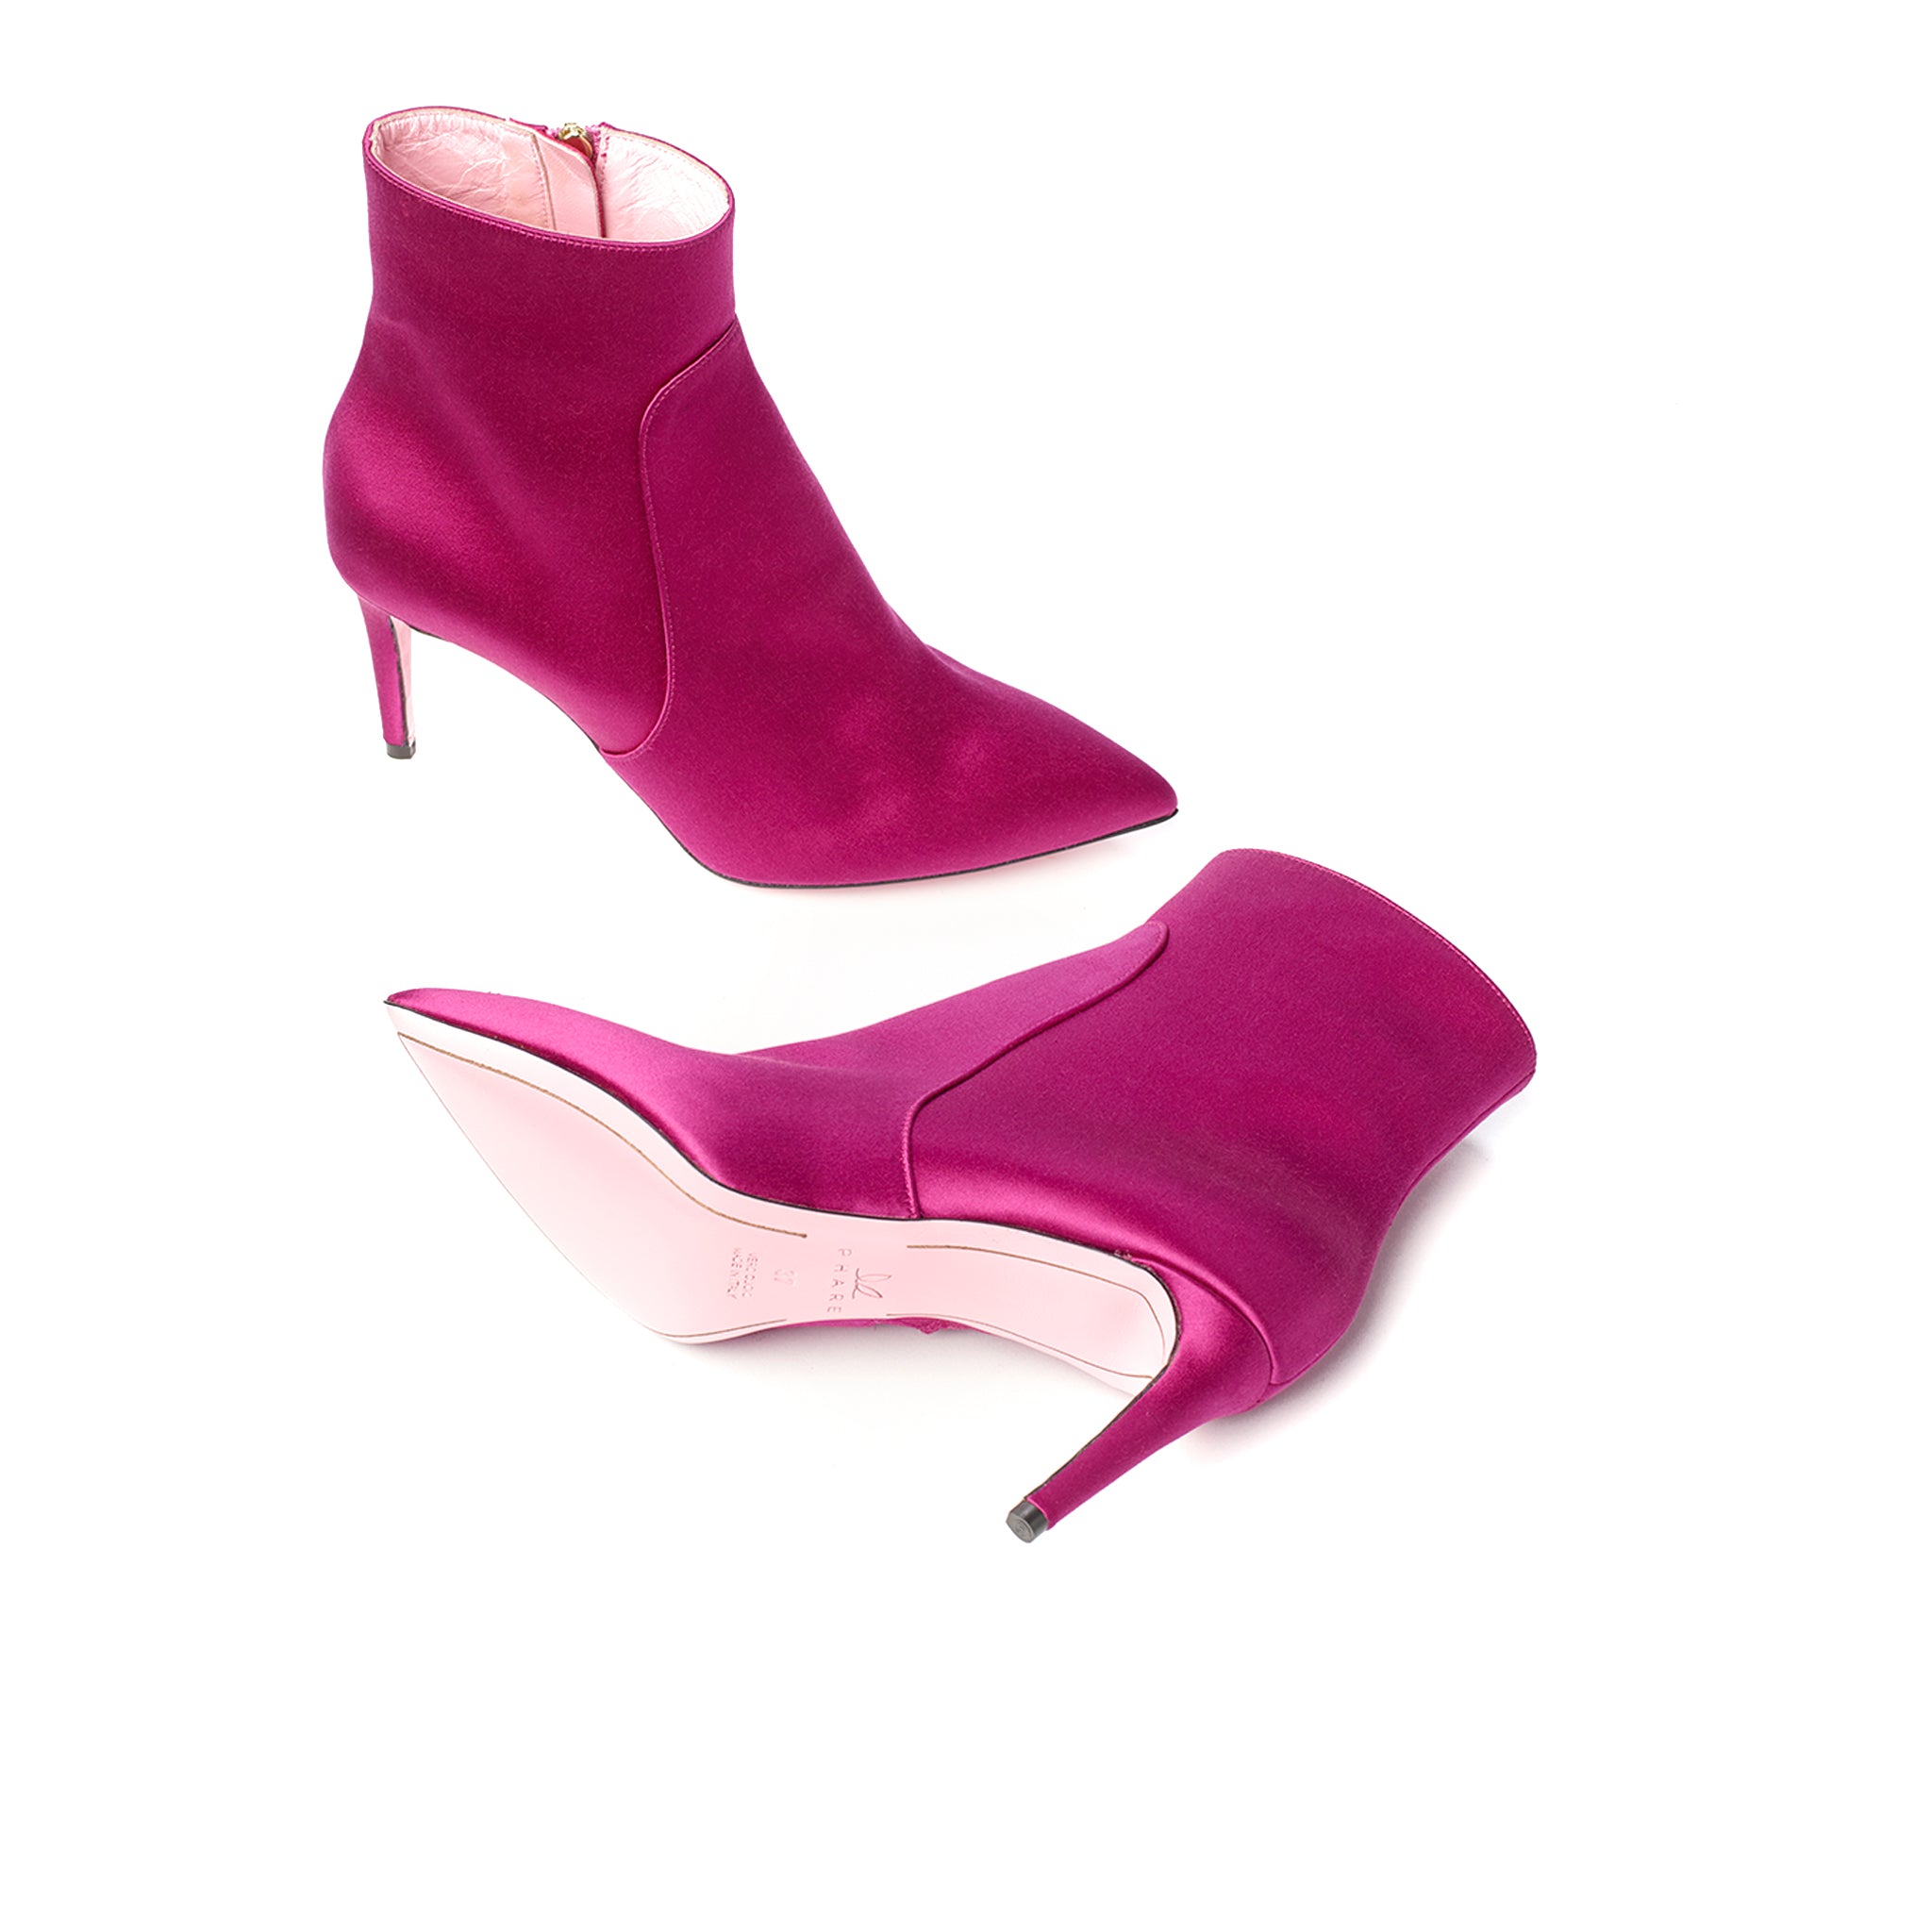 Phare classic heel Fuchsia Satin high heel boot, made in Italy sole view 